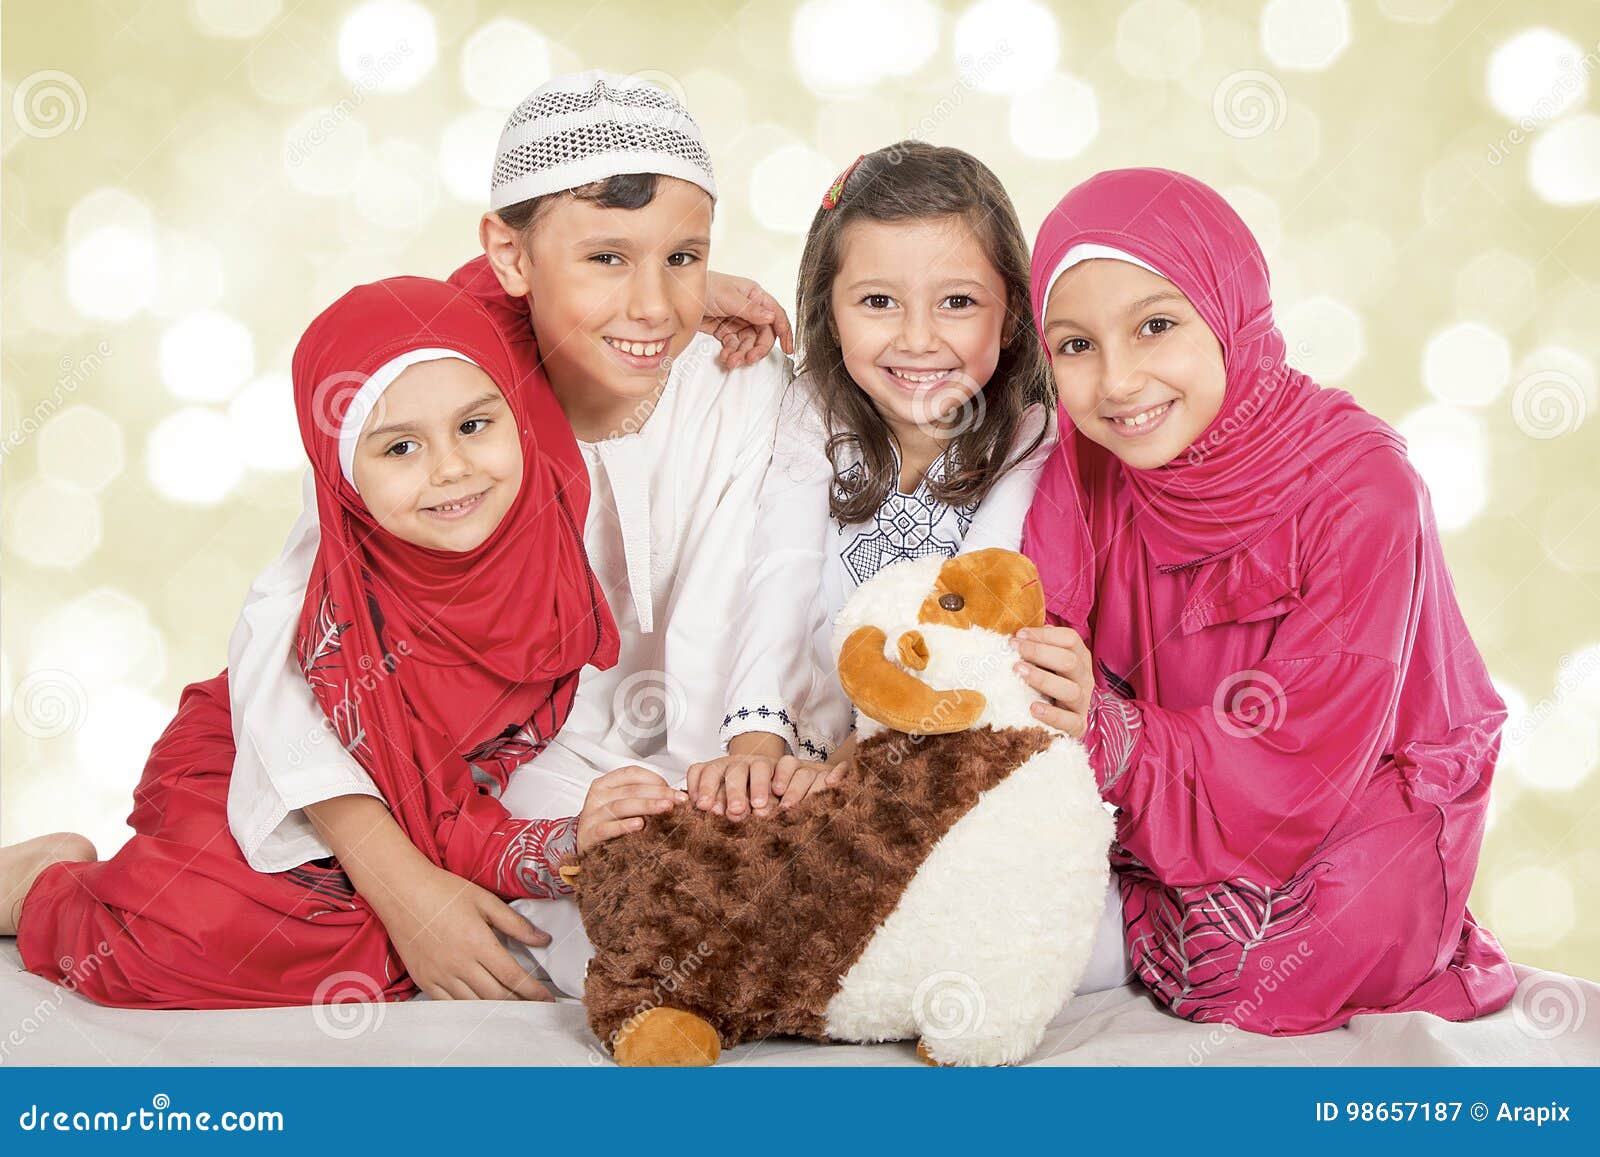 happy little muslim kids playing with sheep toy - celebrating eid ul adha - happy sacrifice feast